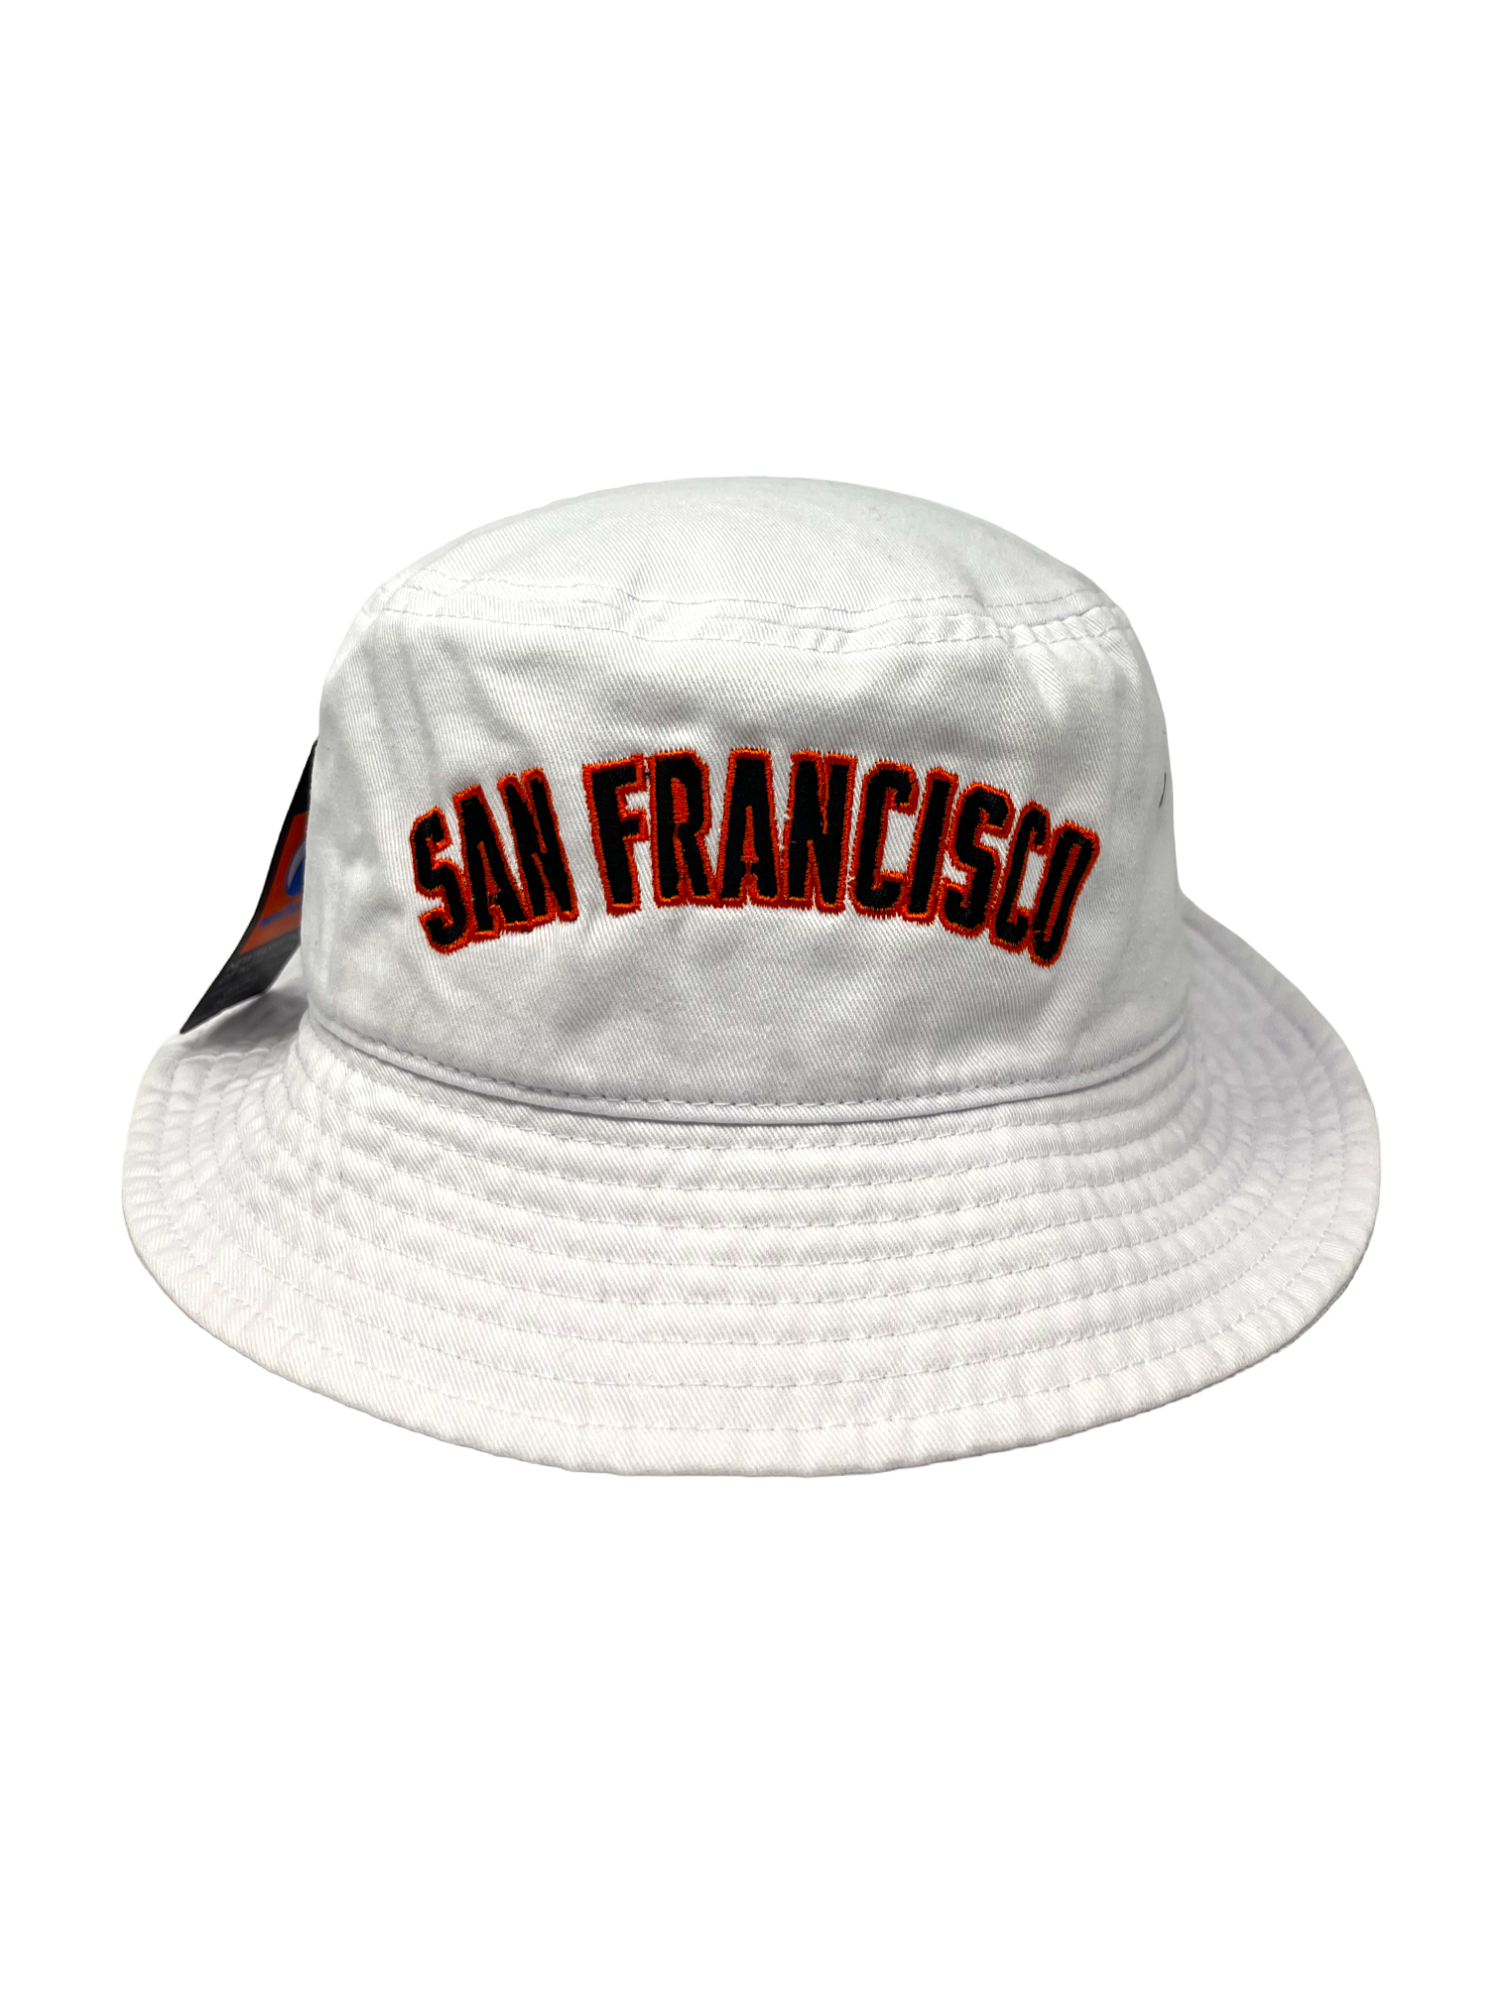 San Francisco Bucket Hat White